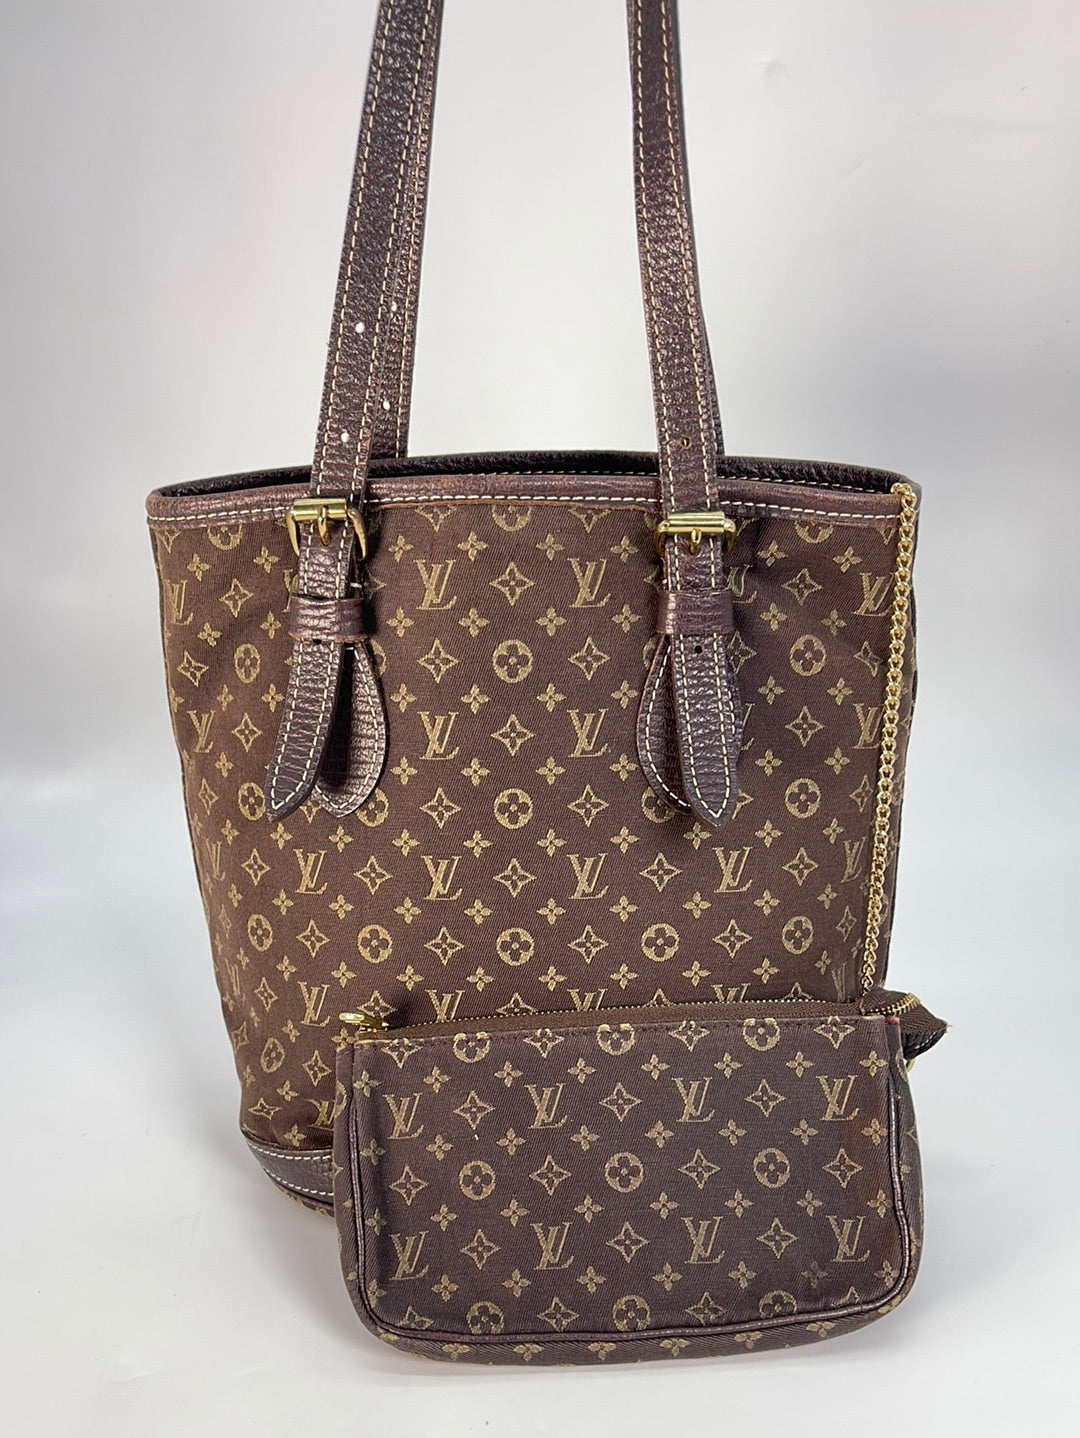 Preowned Authentic Louis Vuitton Monogram Canvas Petit Bucket Tote Bag